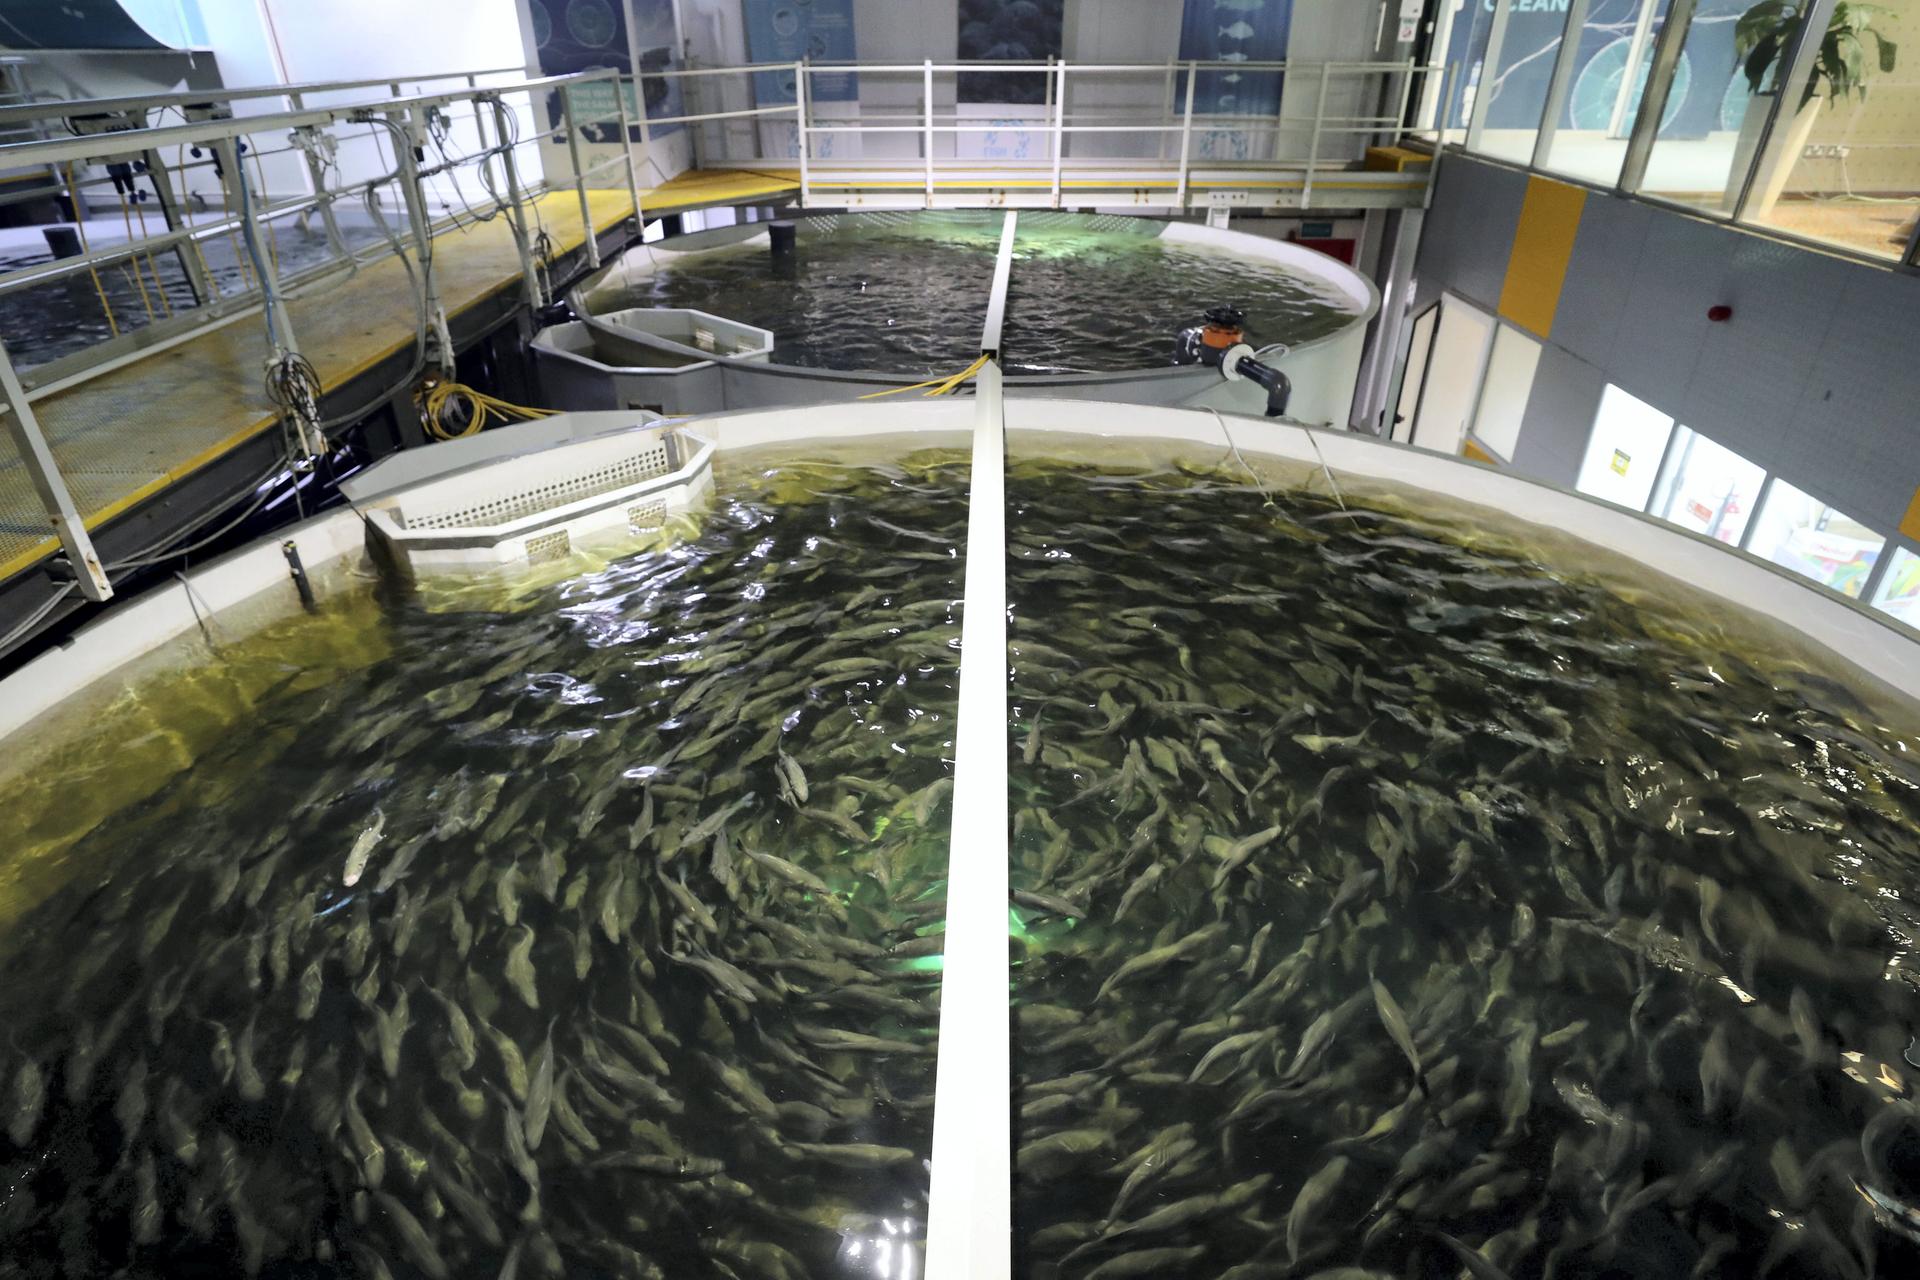 Indoor fish farm brings the freshwater lakes of Scotland to Dubai